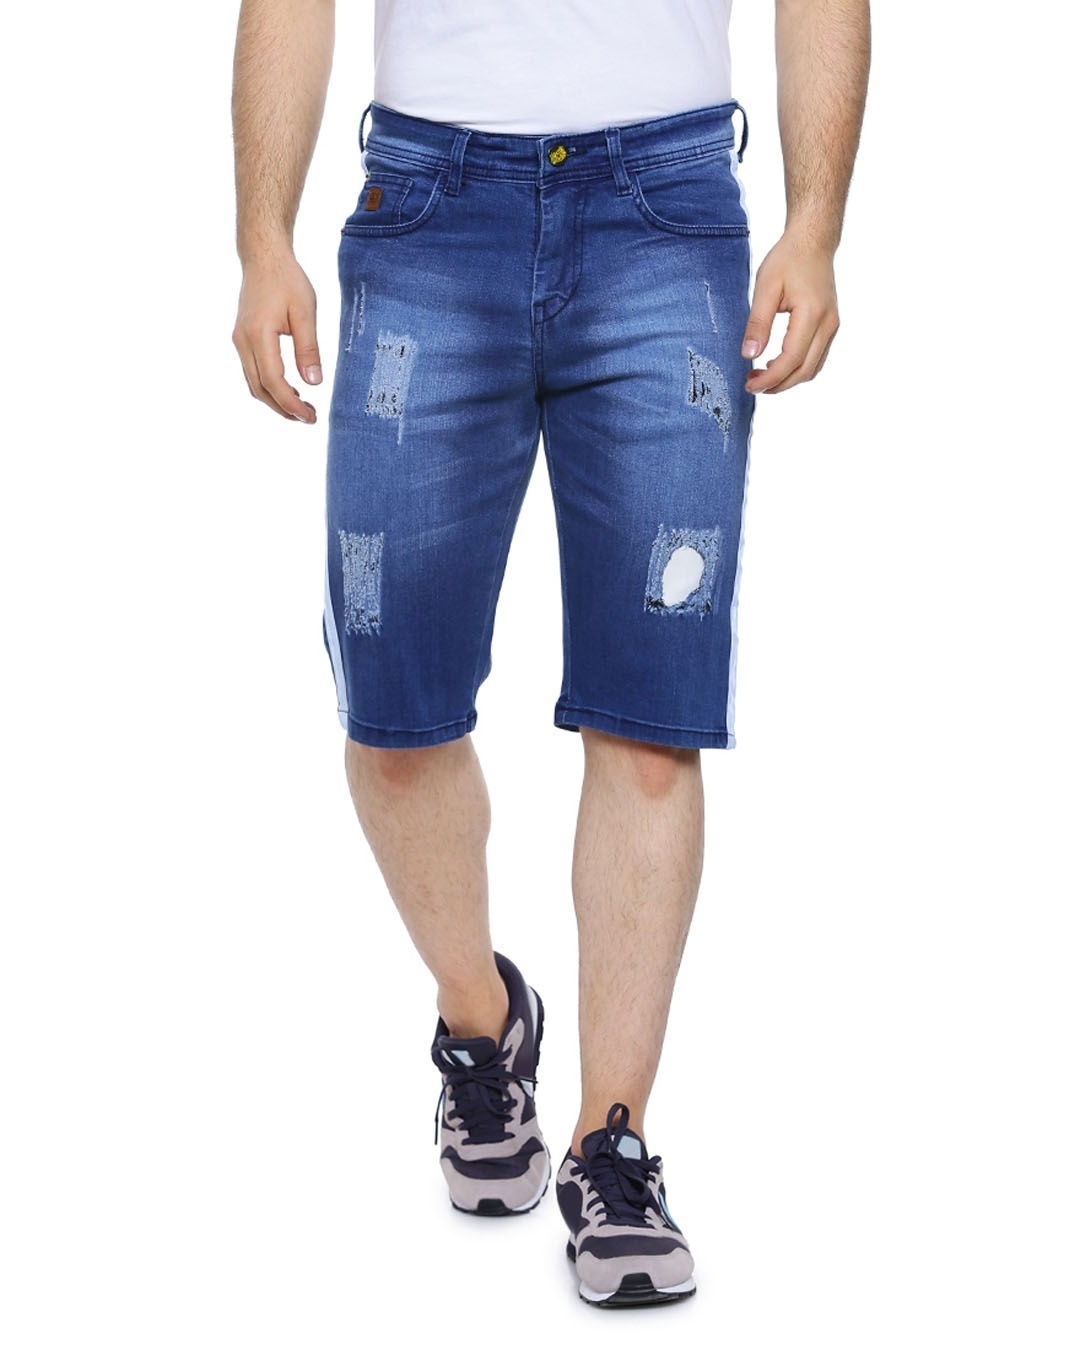 Shop Men Slim Fit Solid Side Striped Stretch Stylish New Trends Blue Denim Shorts-Front